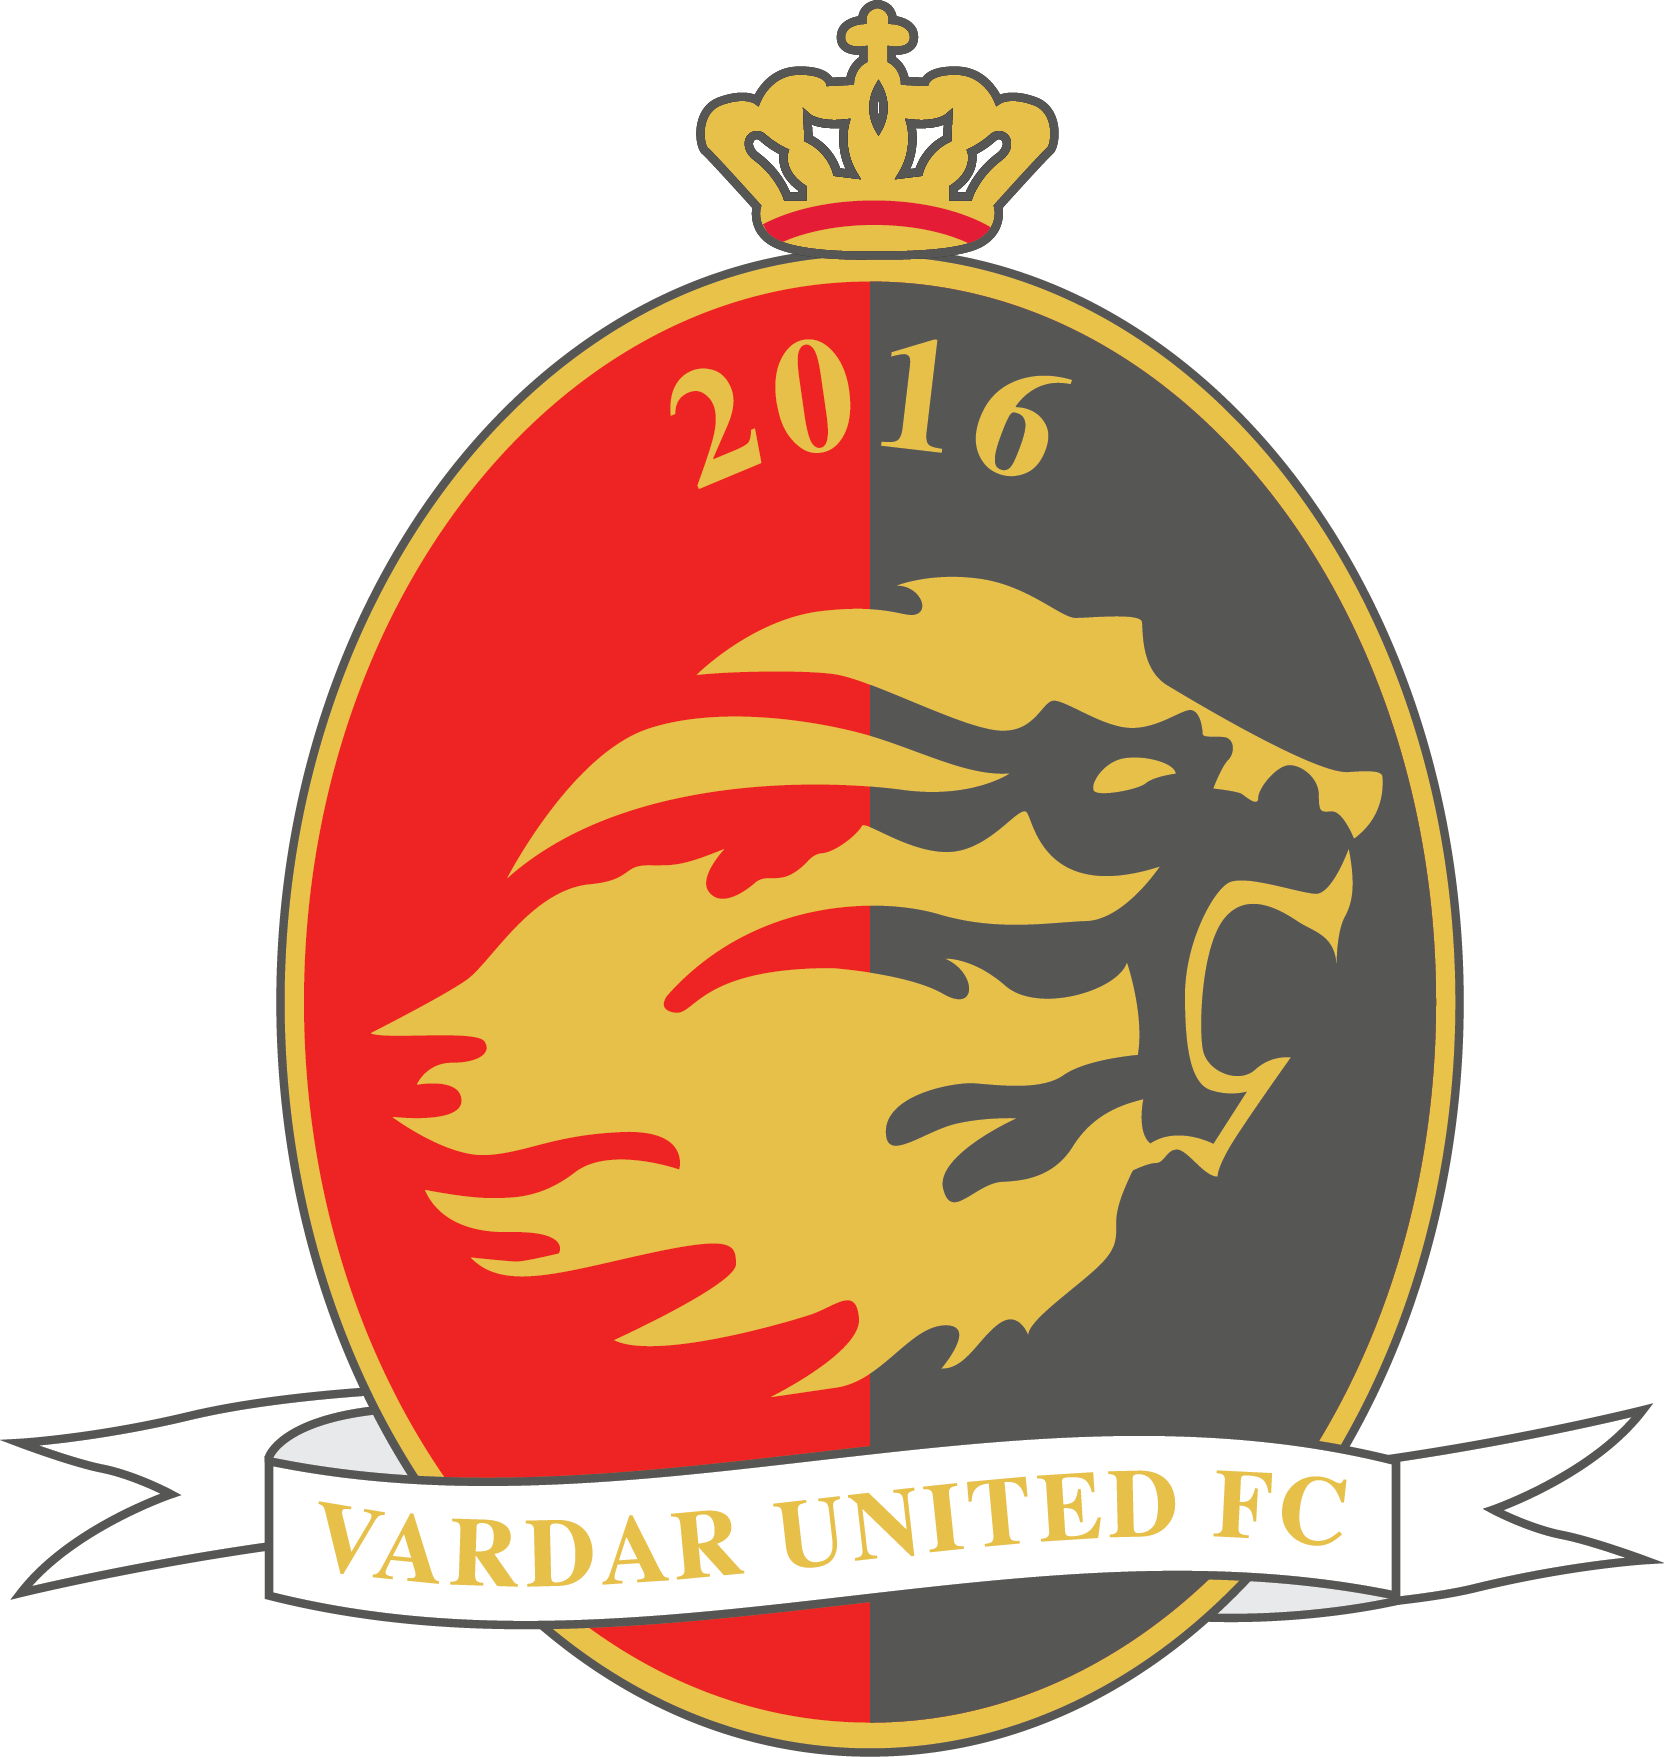 VARDAR UNITED FC team badge